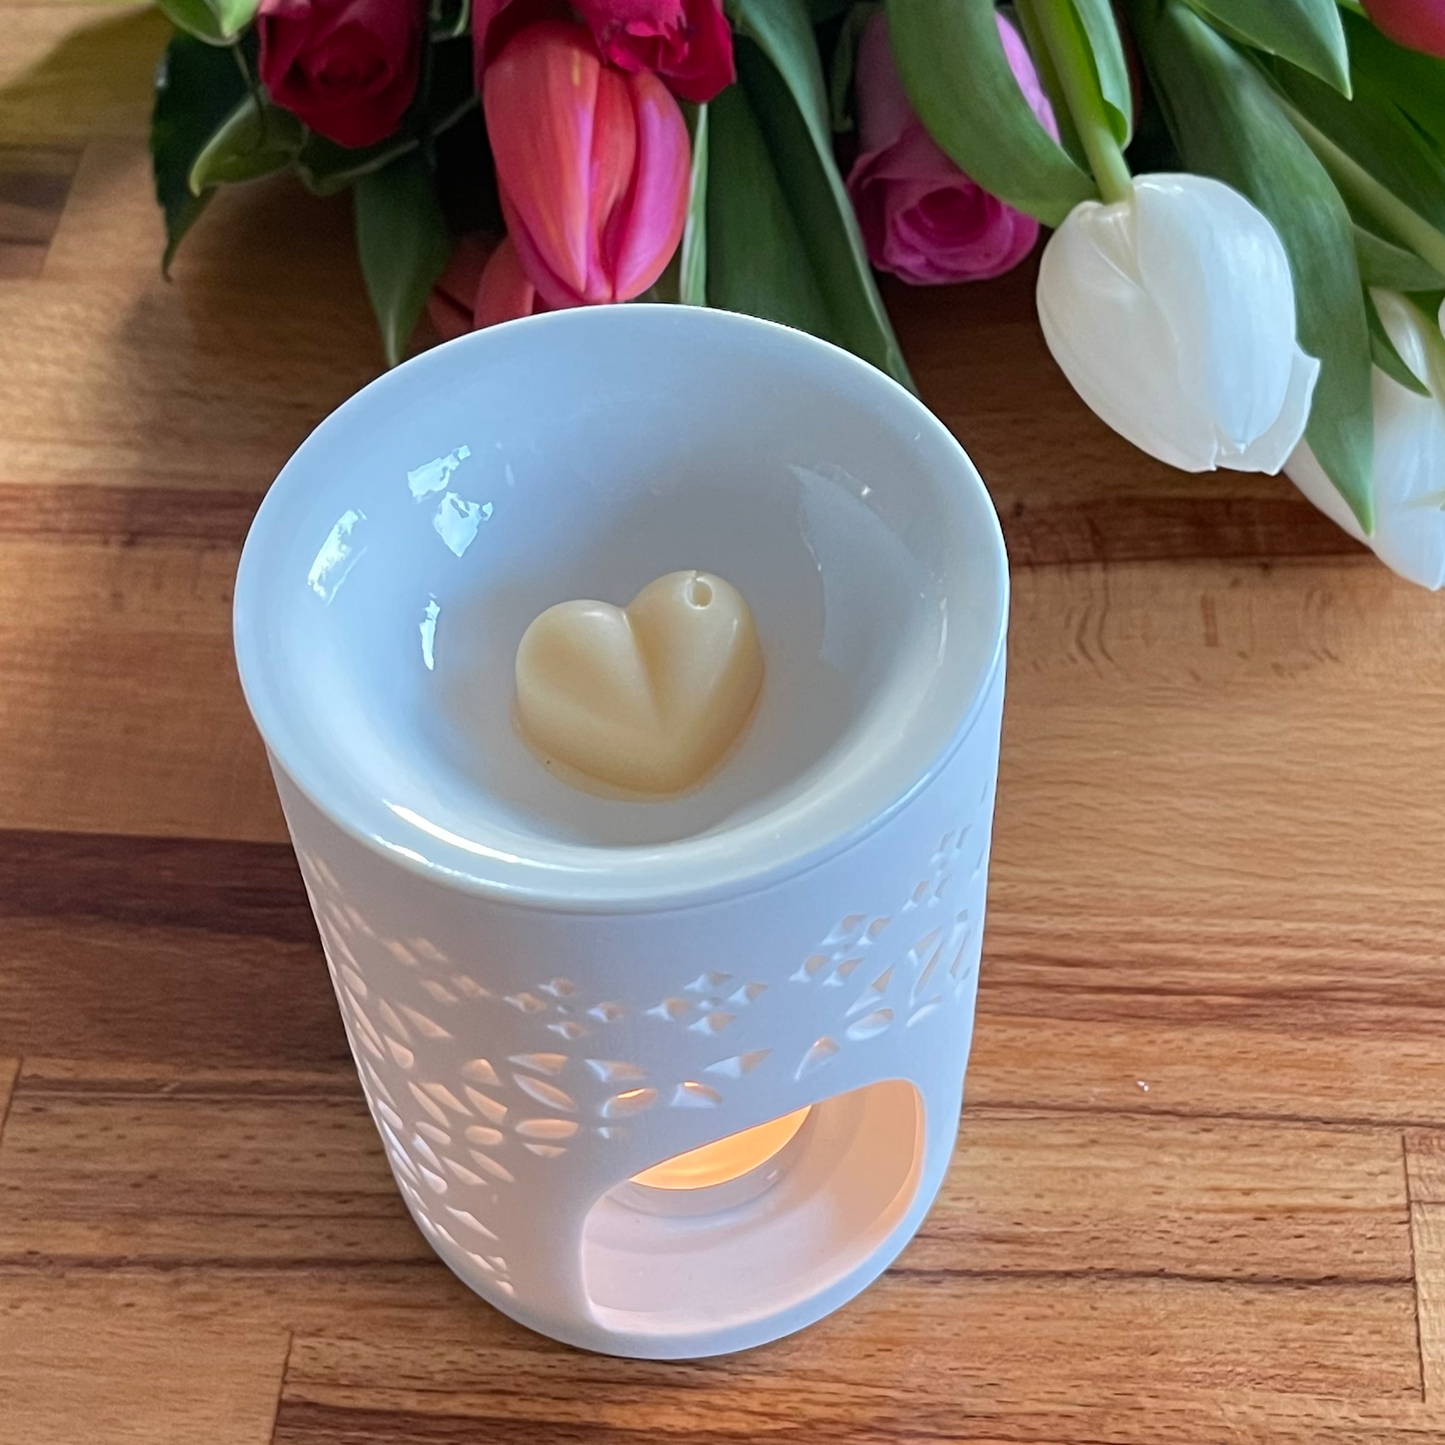 White Ceramic tea light wax melter – Glowed Candles